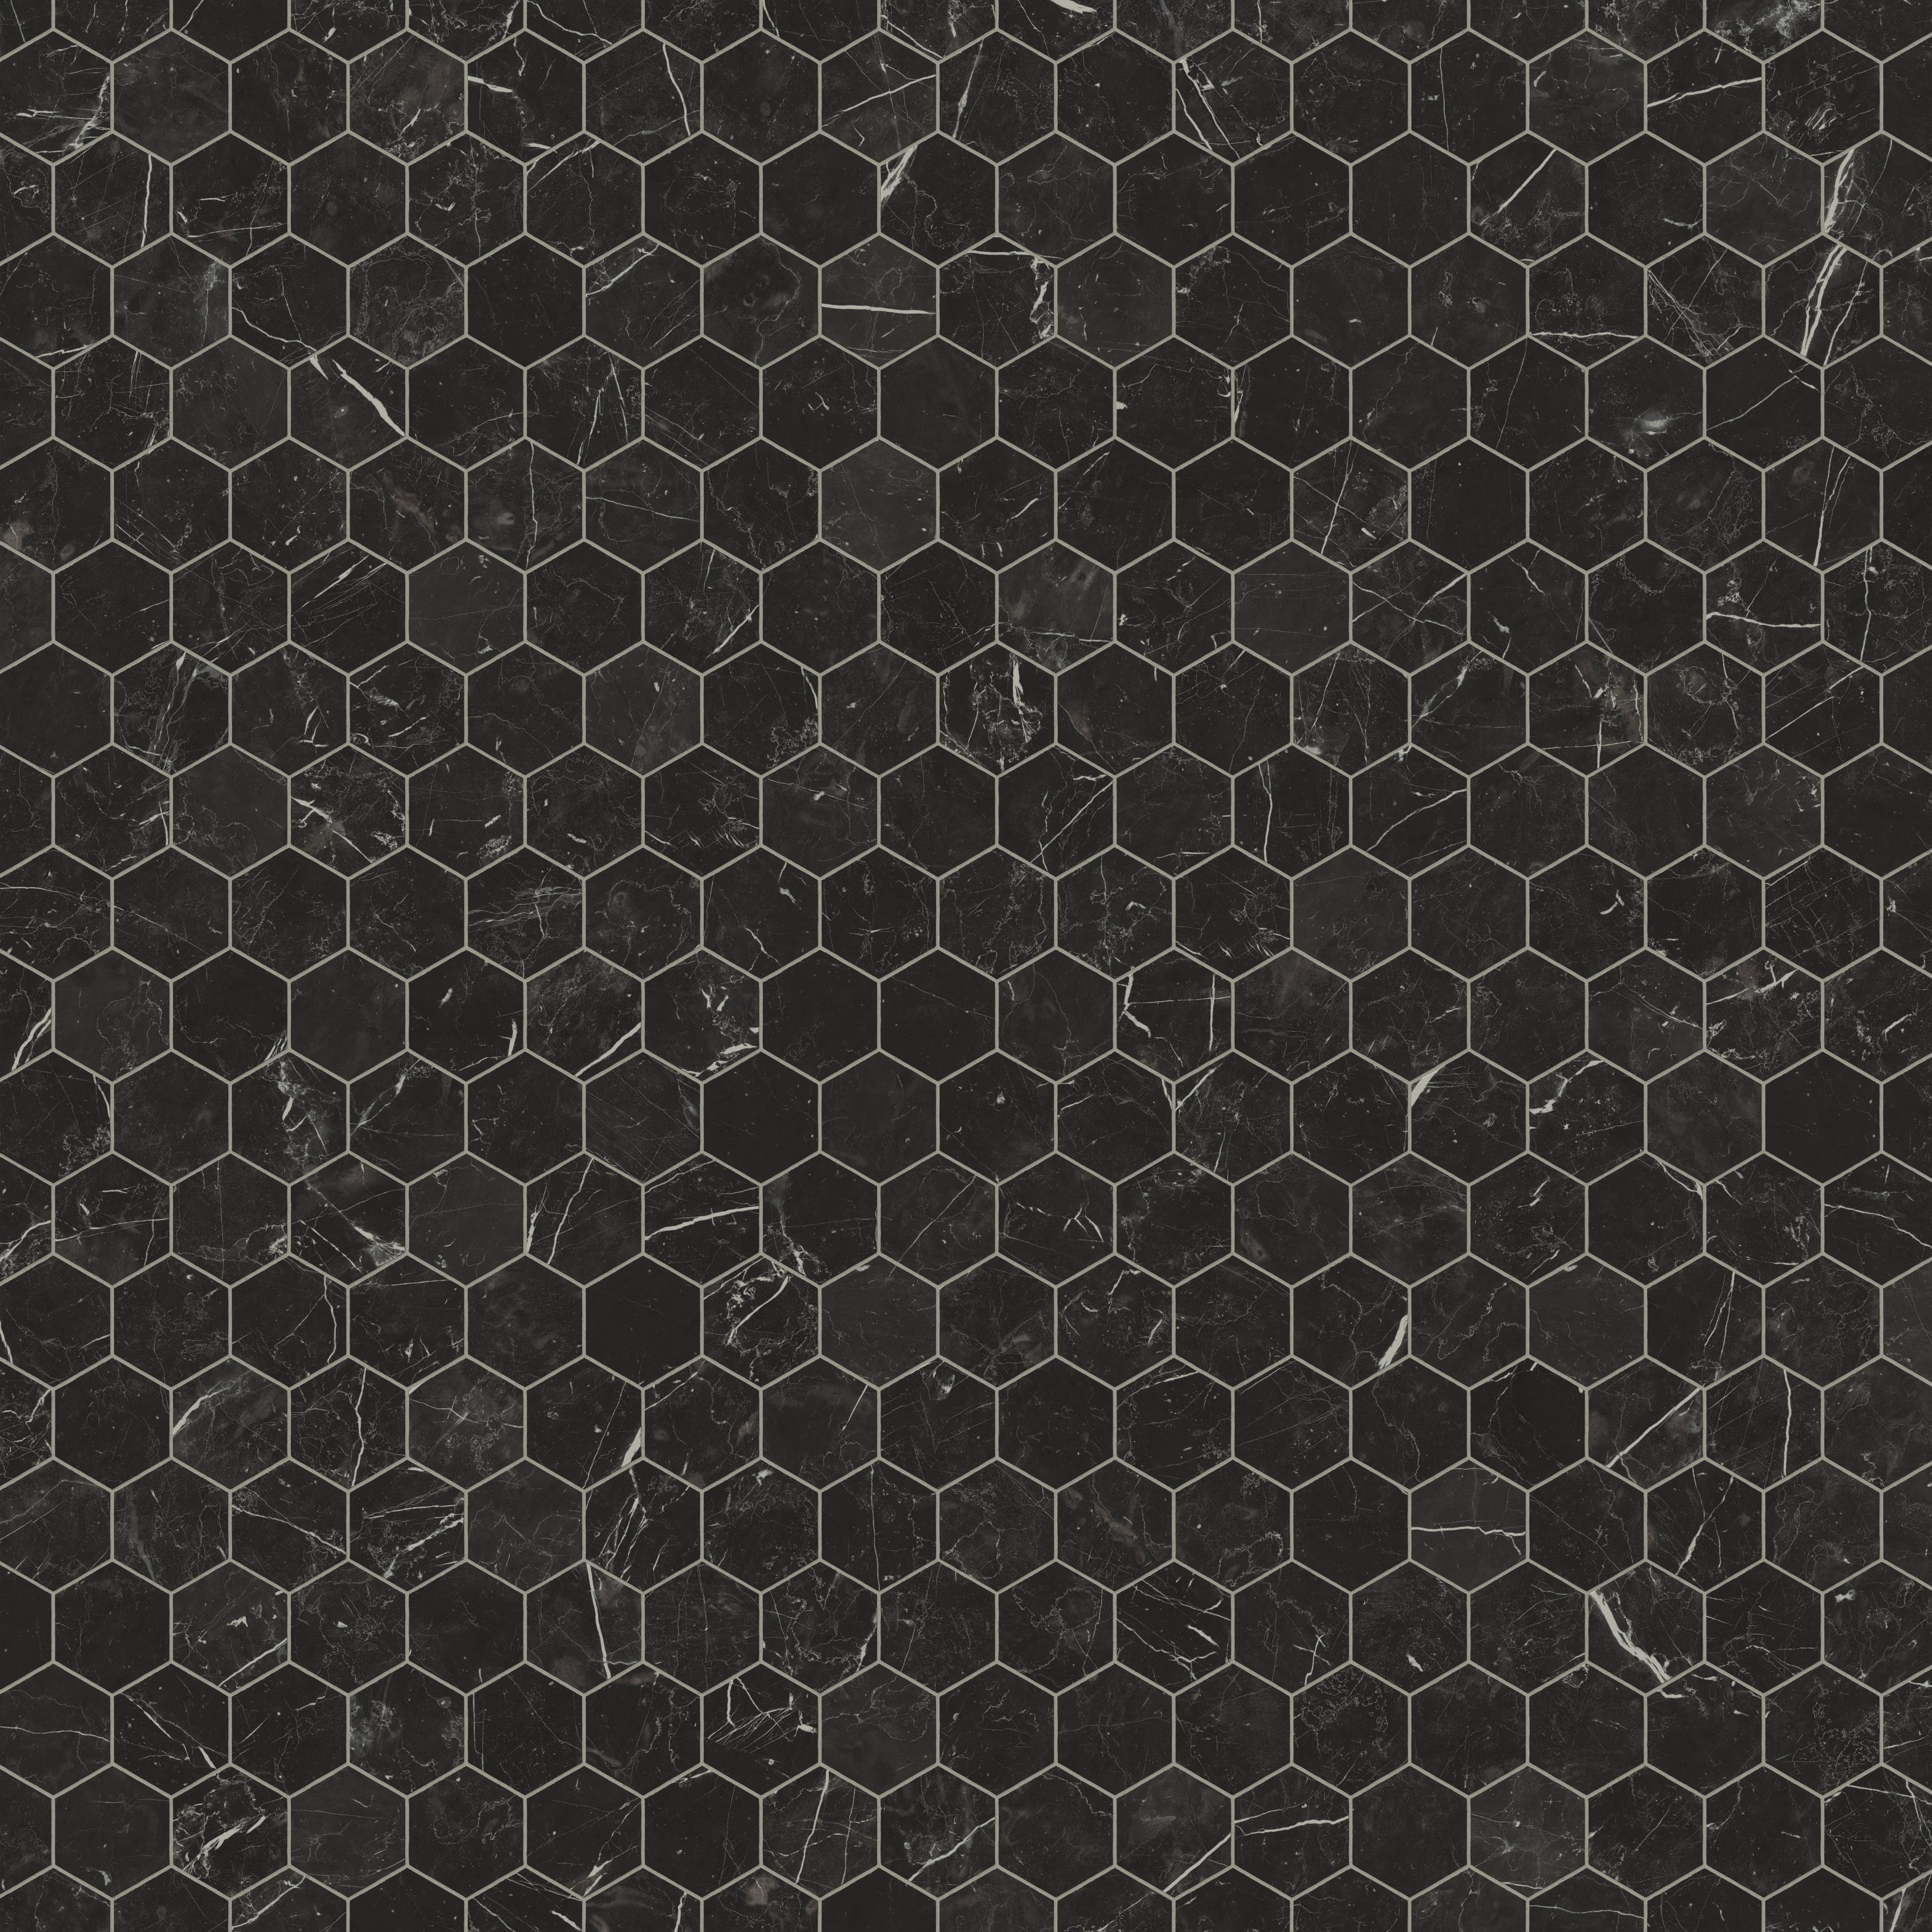 Leona 3x3 Polished Porcelain Hexagon Mosaic Tile in Nero Marquina